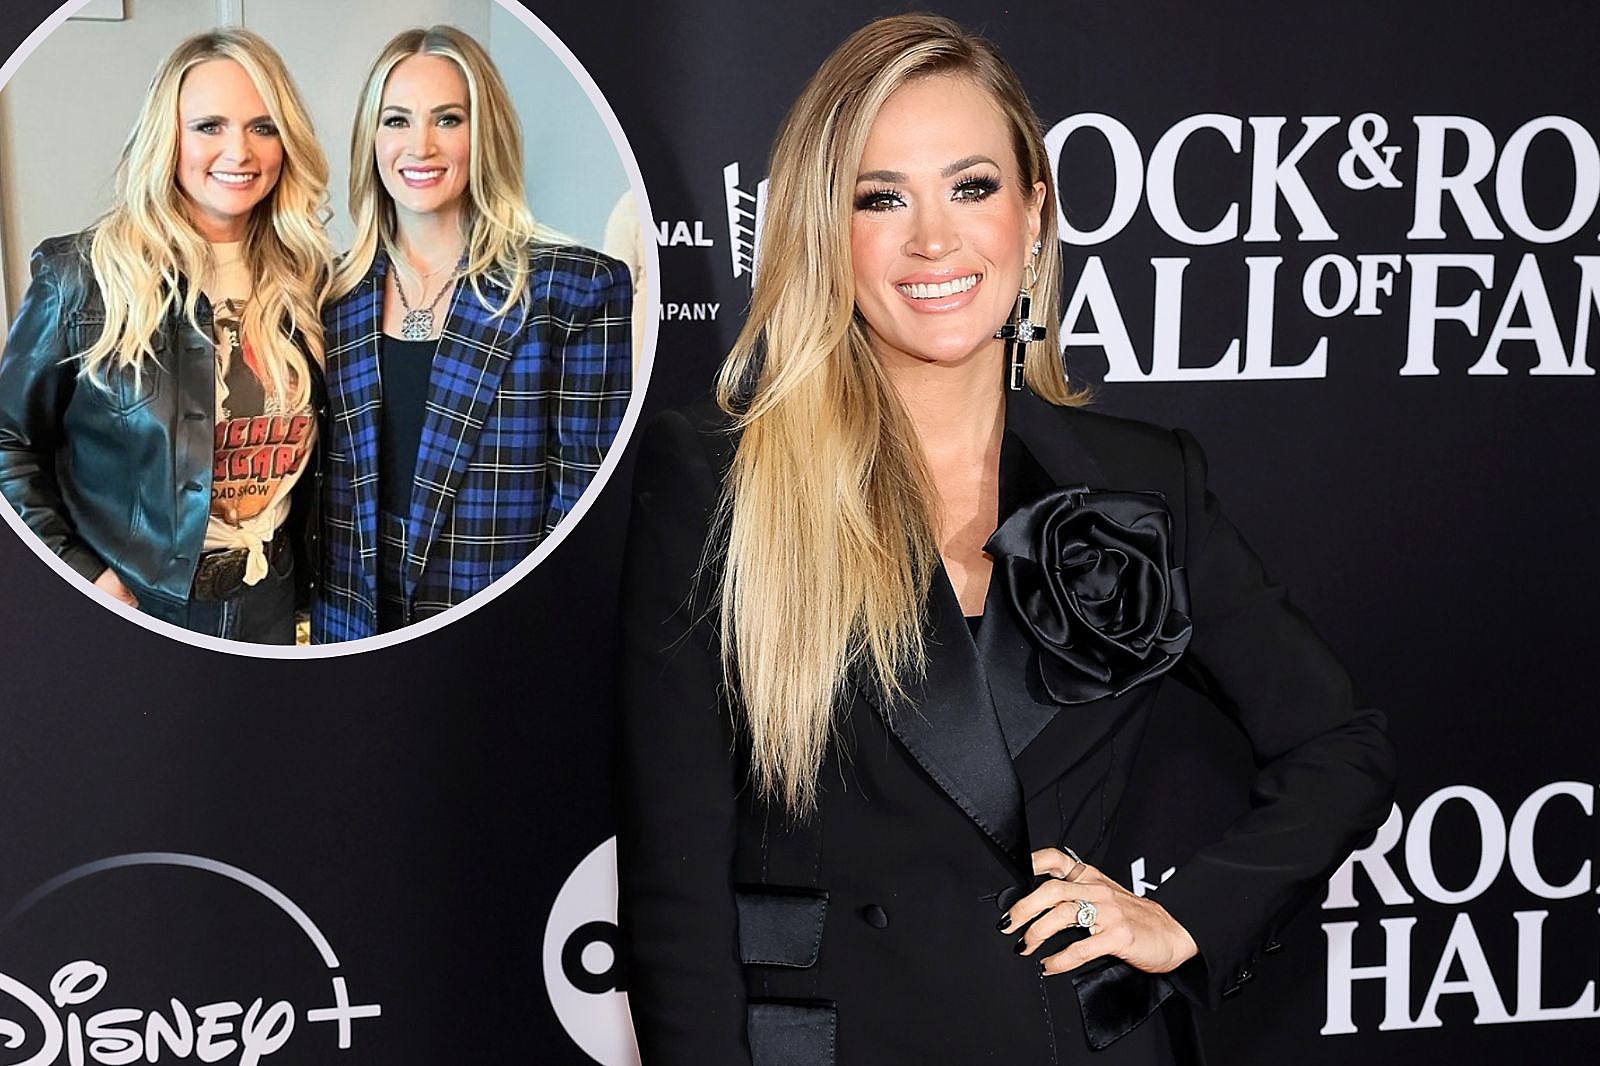 Girl Power! Carrie Underwood Attends Miranda Lambert's Vegas Show